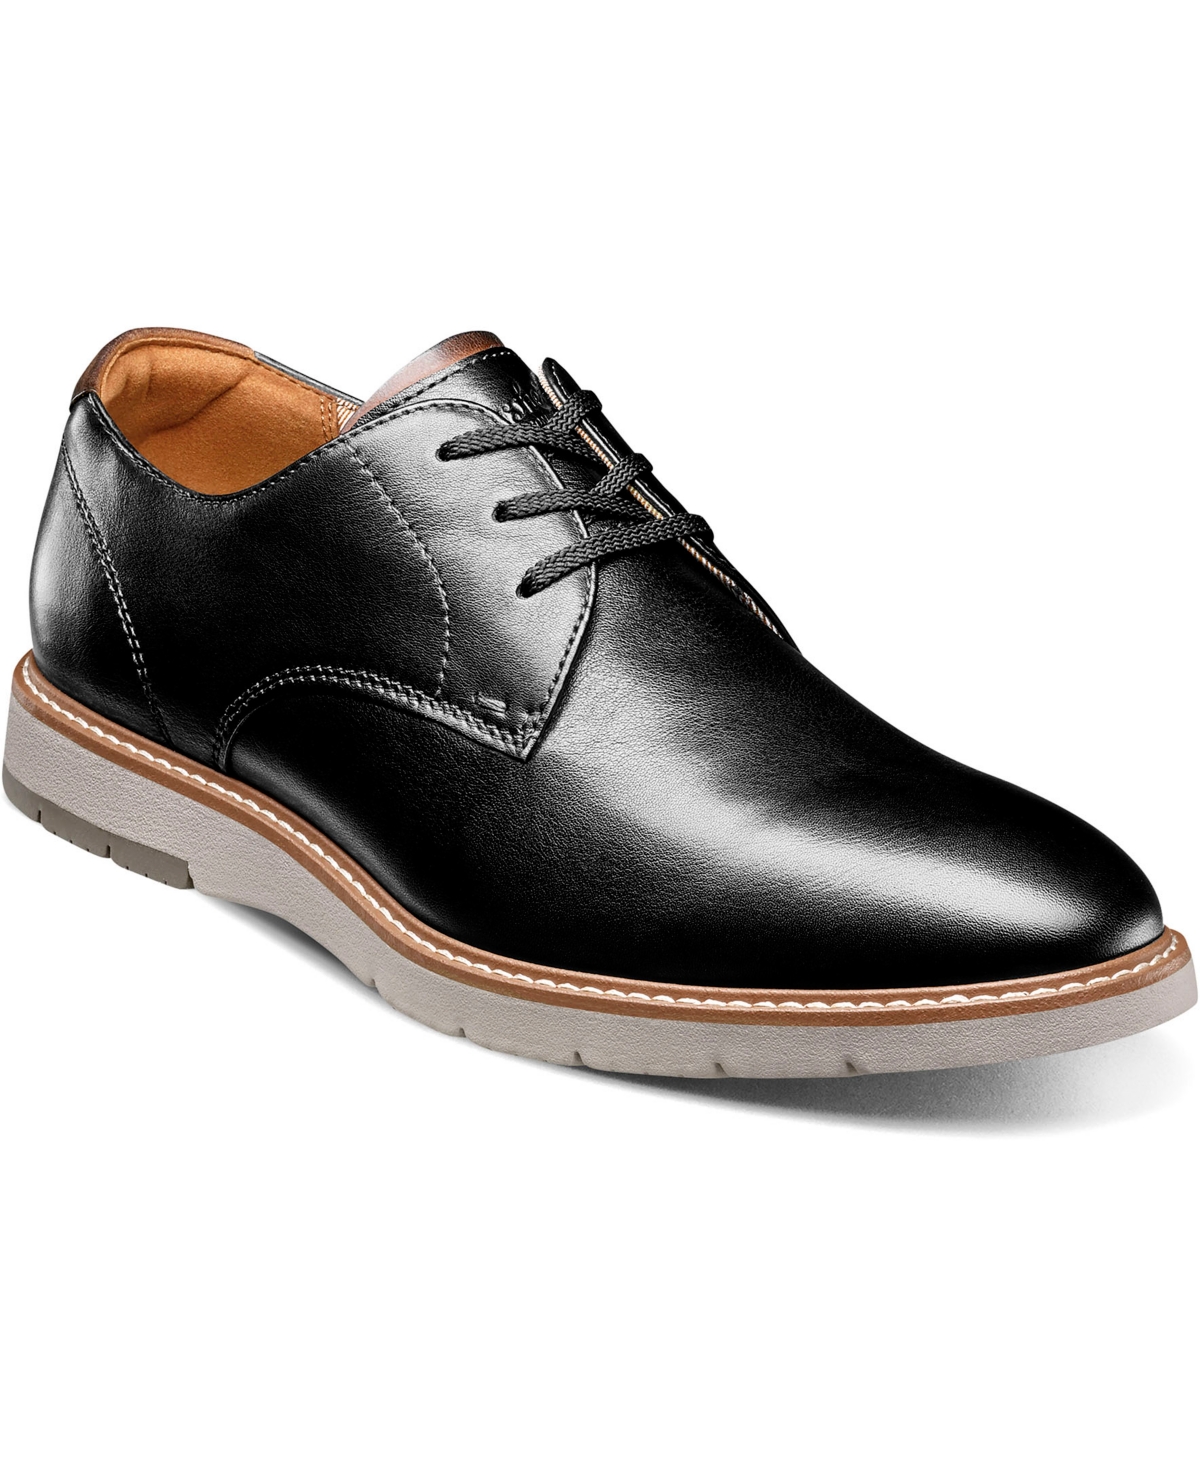 Men's Vibe Plain Toe Oxford Lace Up Dress Shoe - Cognac Multi